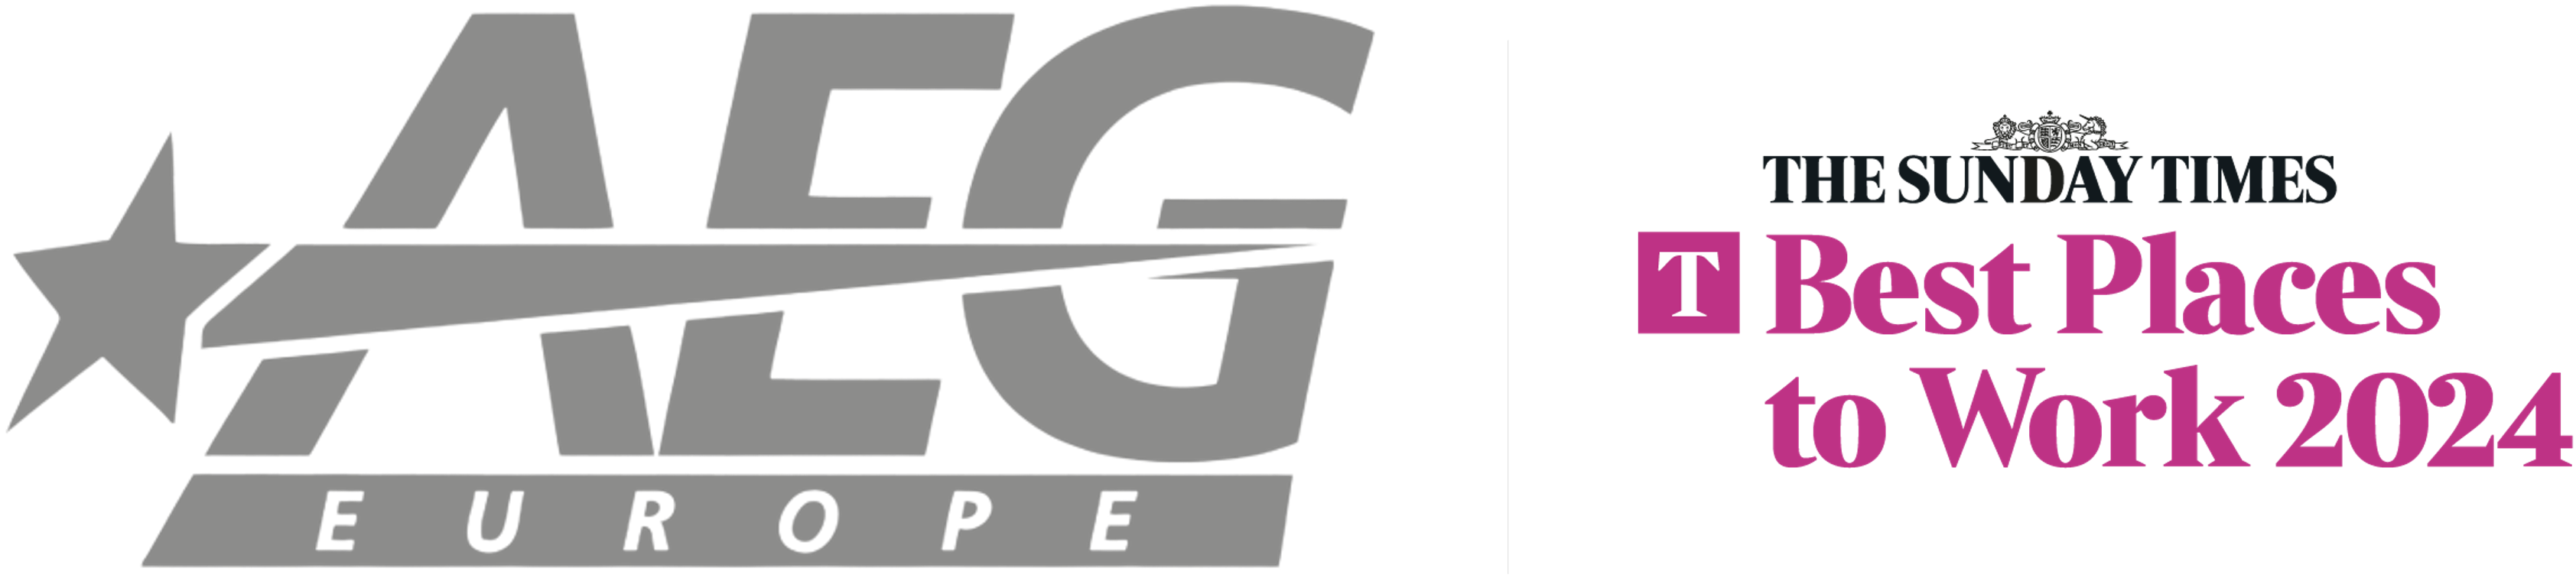 AEG Europe named as 